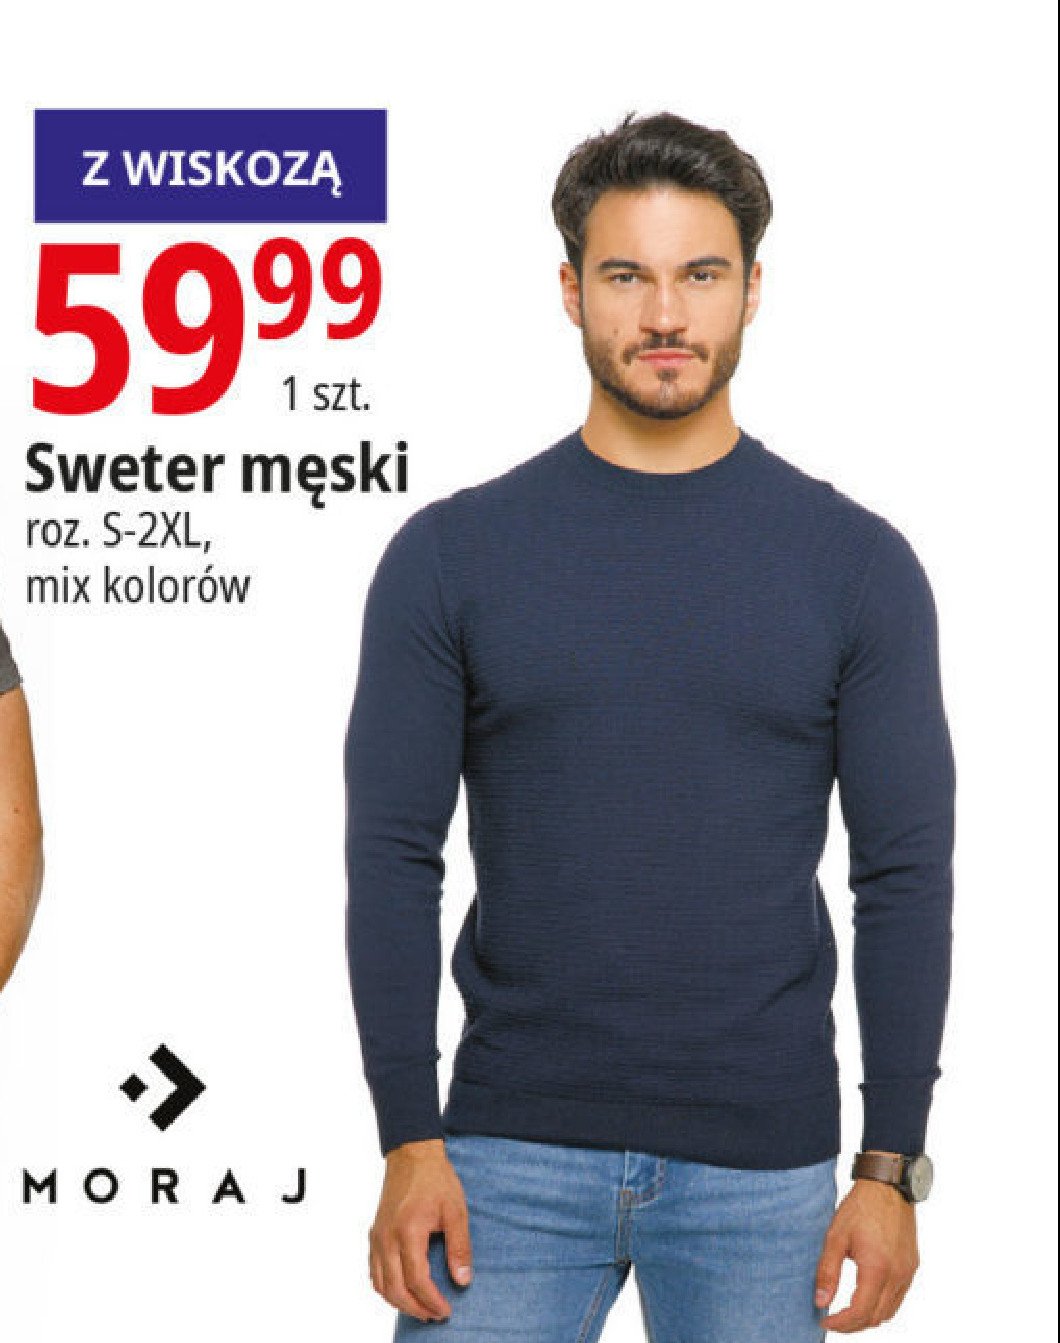 Sweter męski rozm. s-2xl Moraj promocja